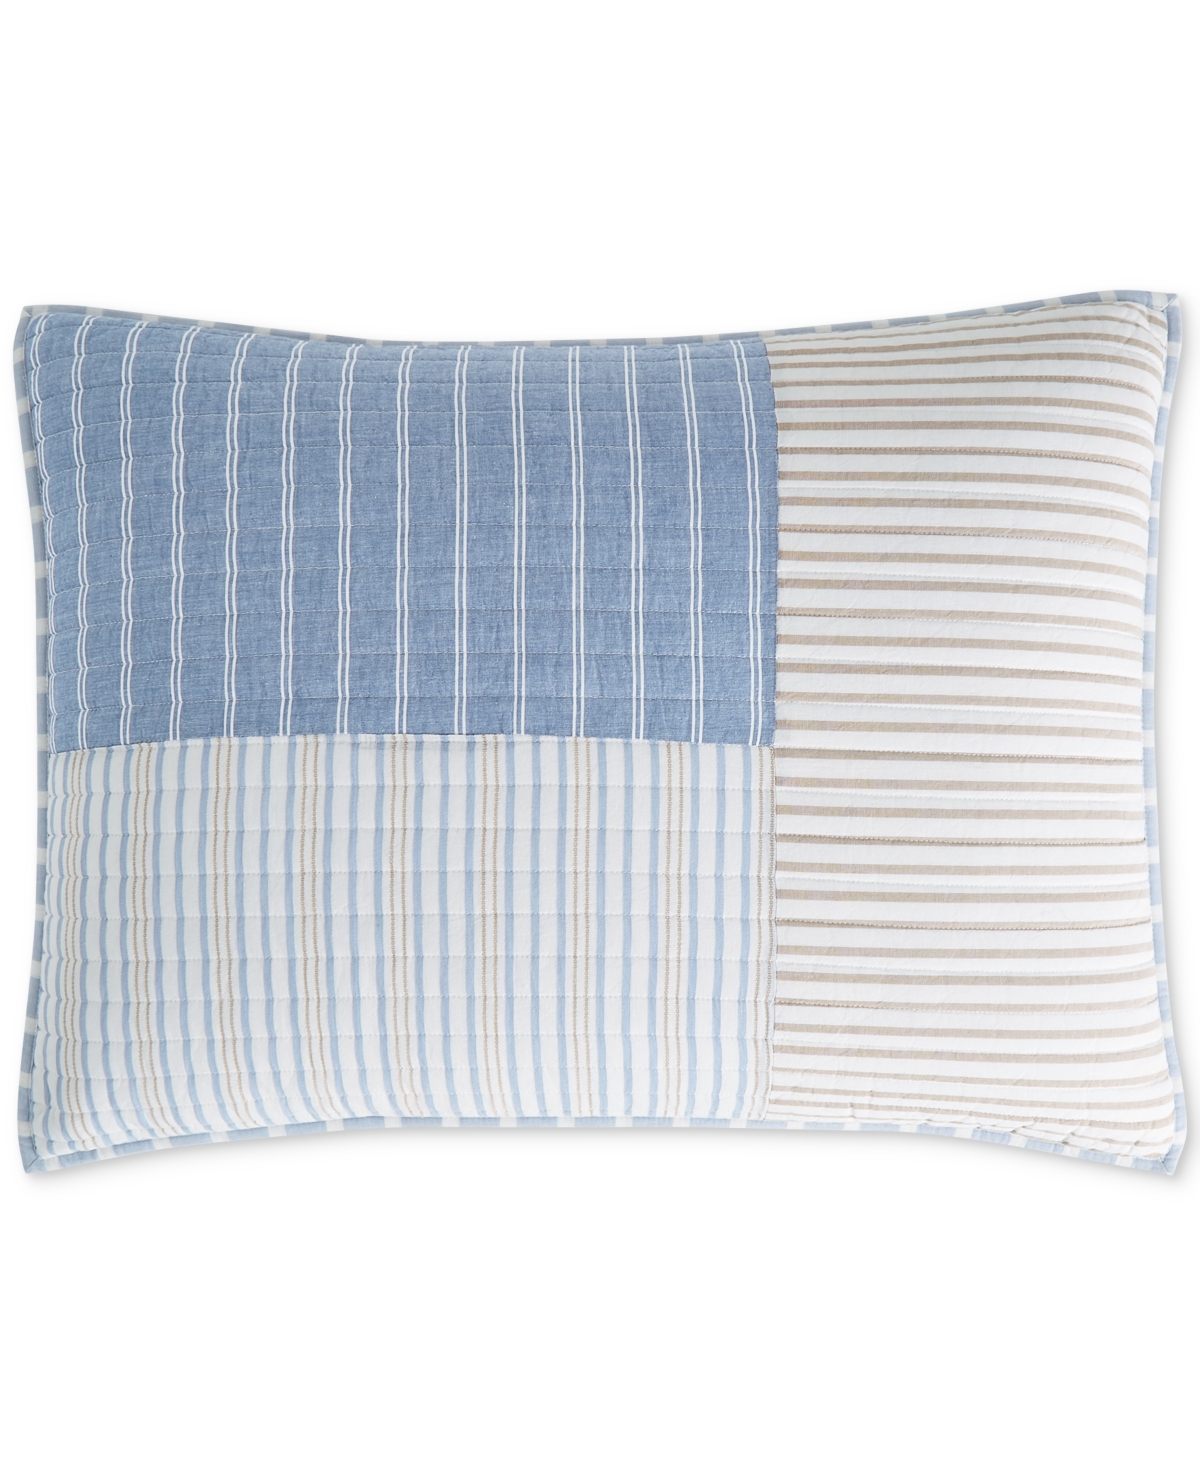 Seaside Stripe Patchwork Cotton Sham, Standard, Created for Macy's - Blue